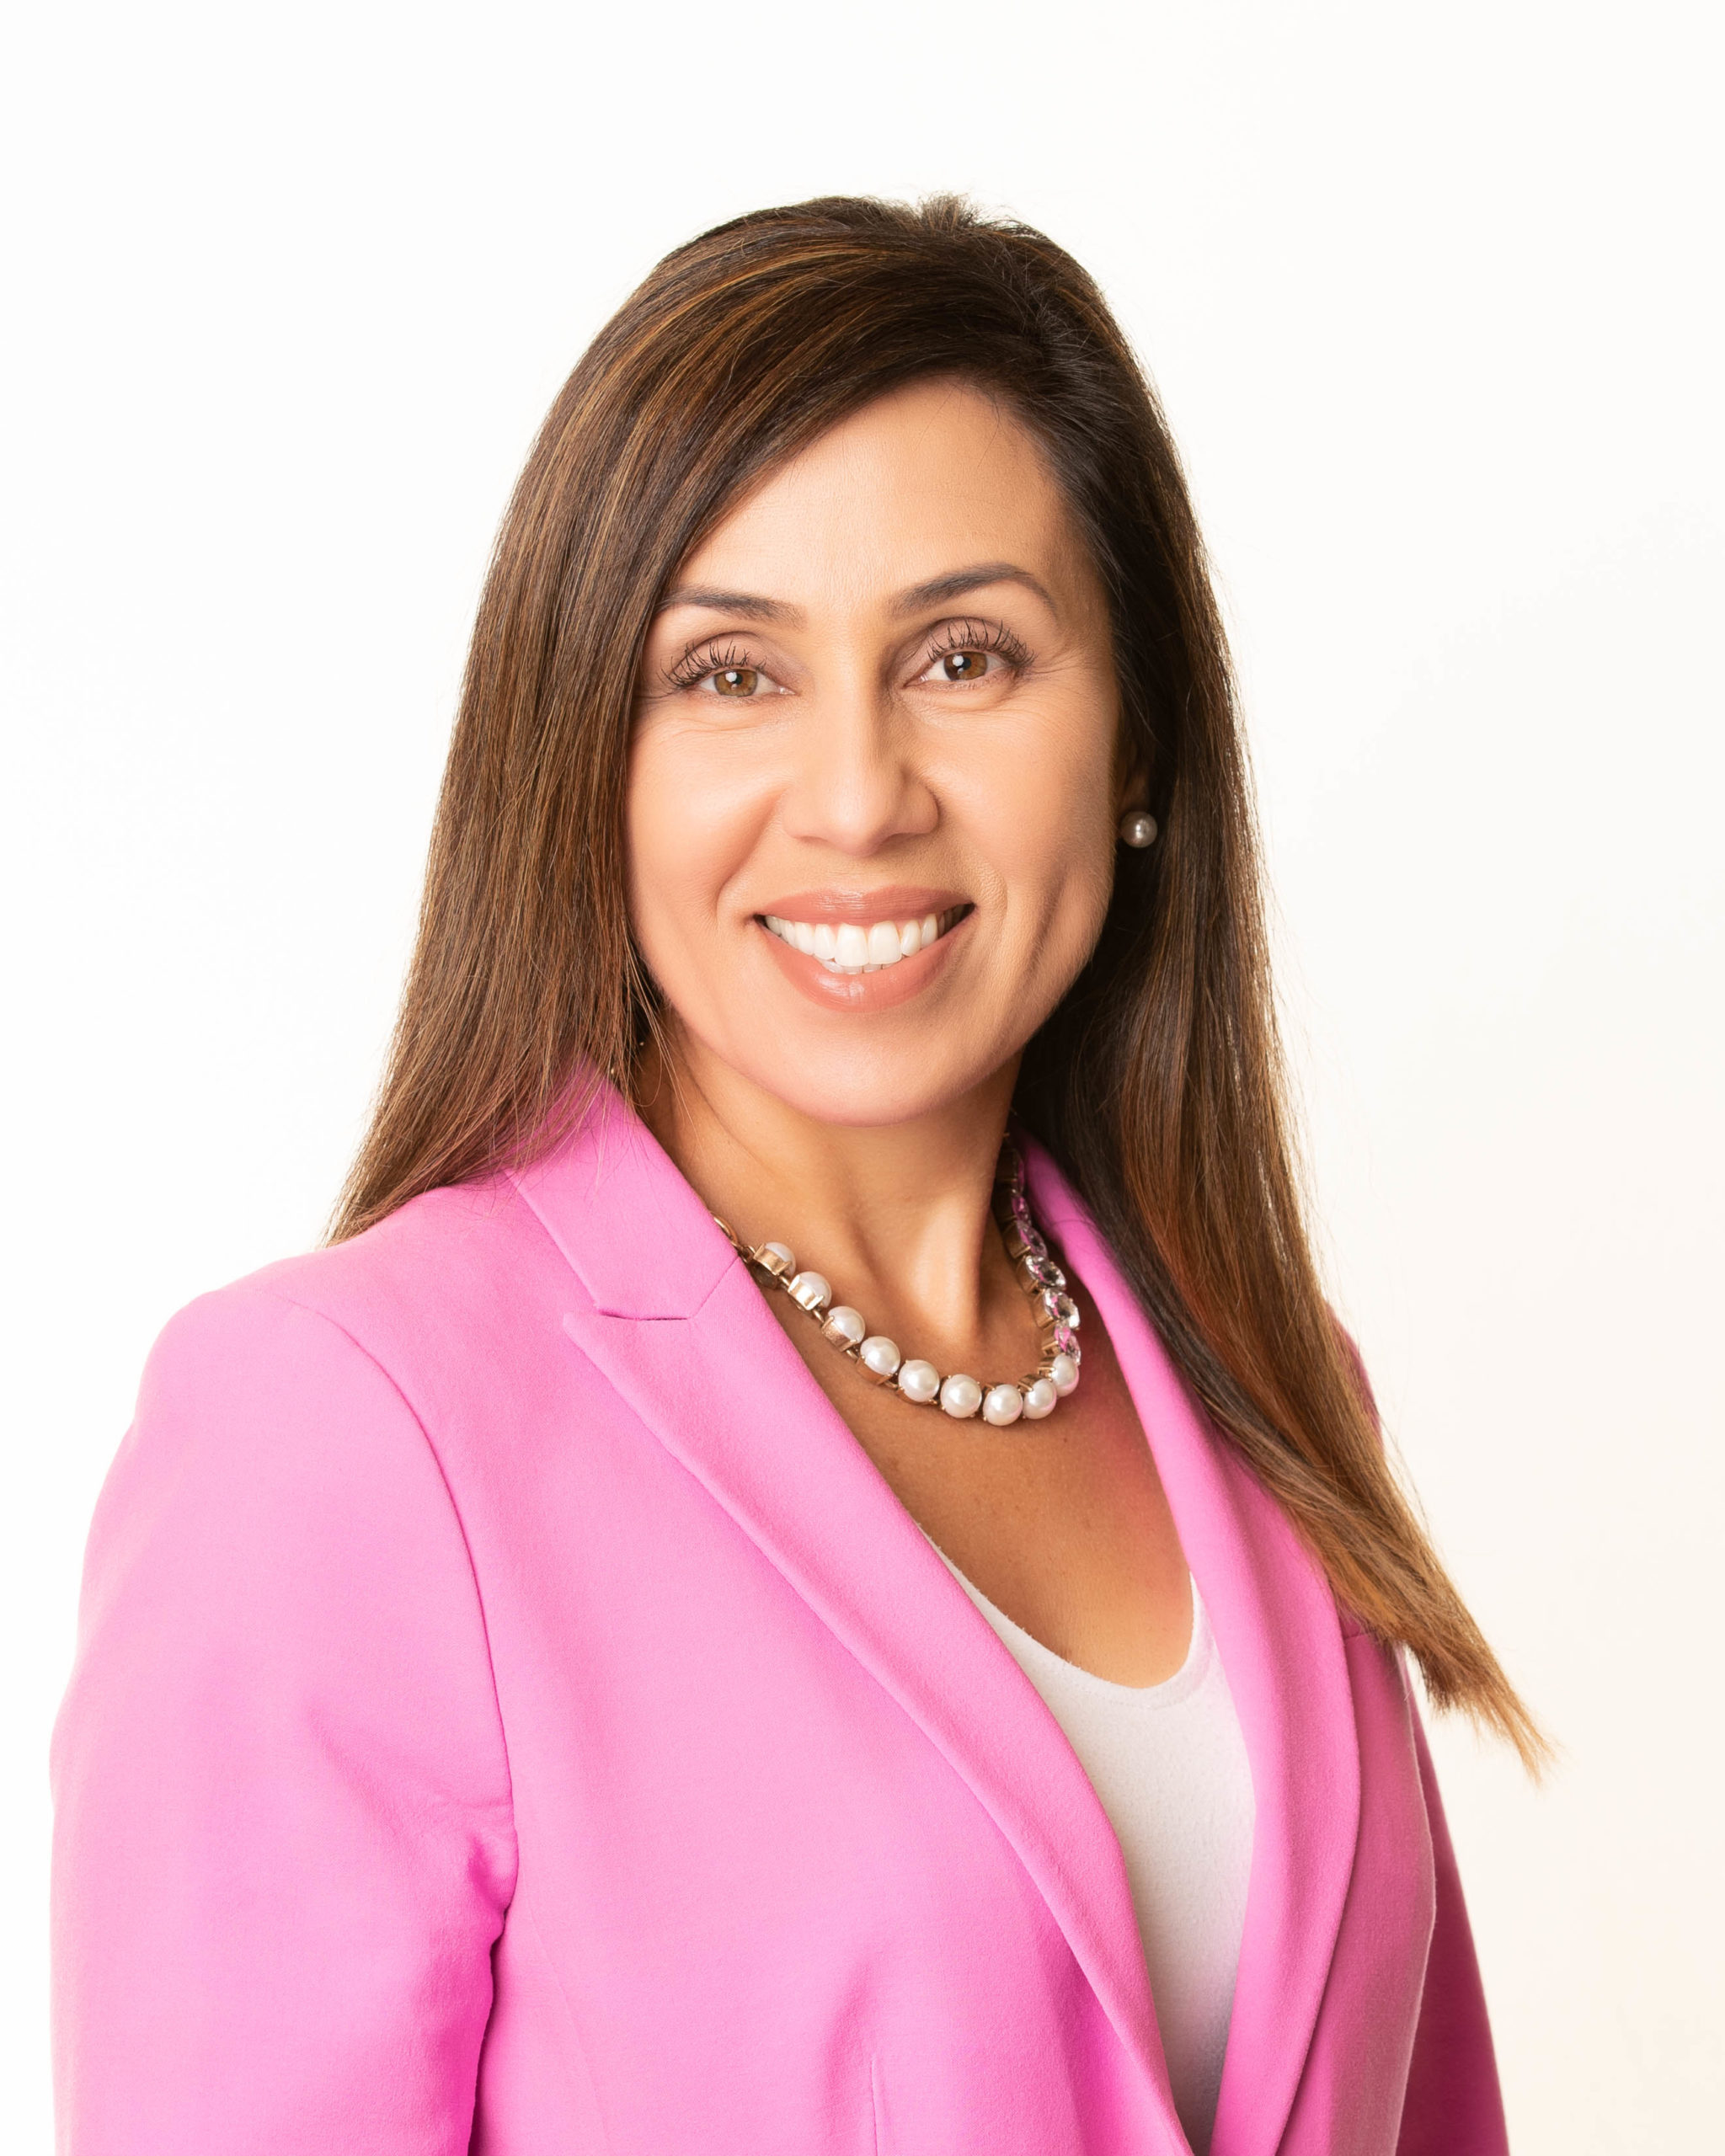 Diana Sherifali, PHRI McMaster University researcher and professor